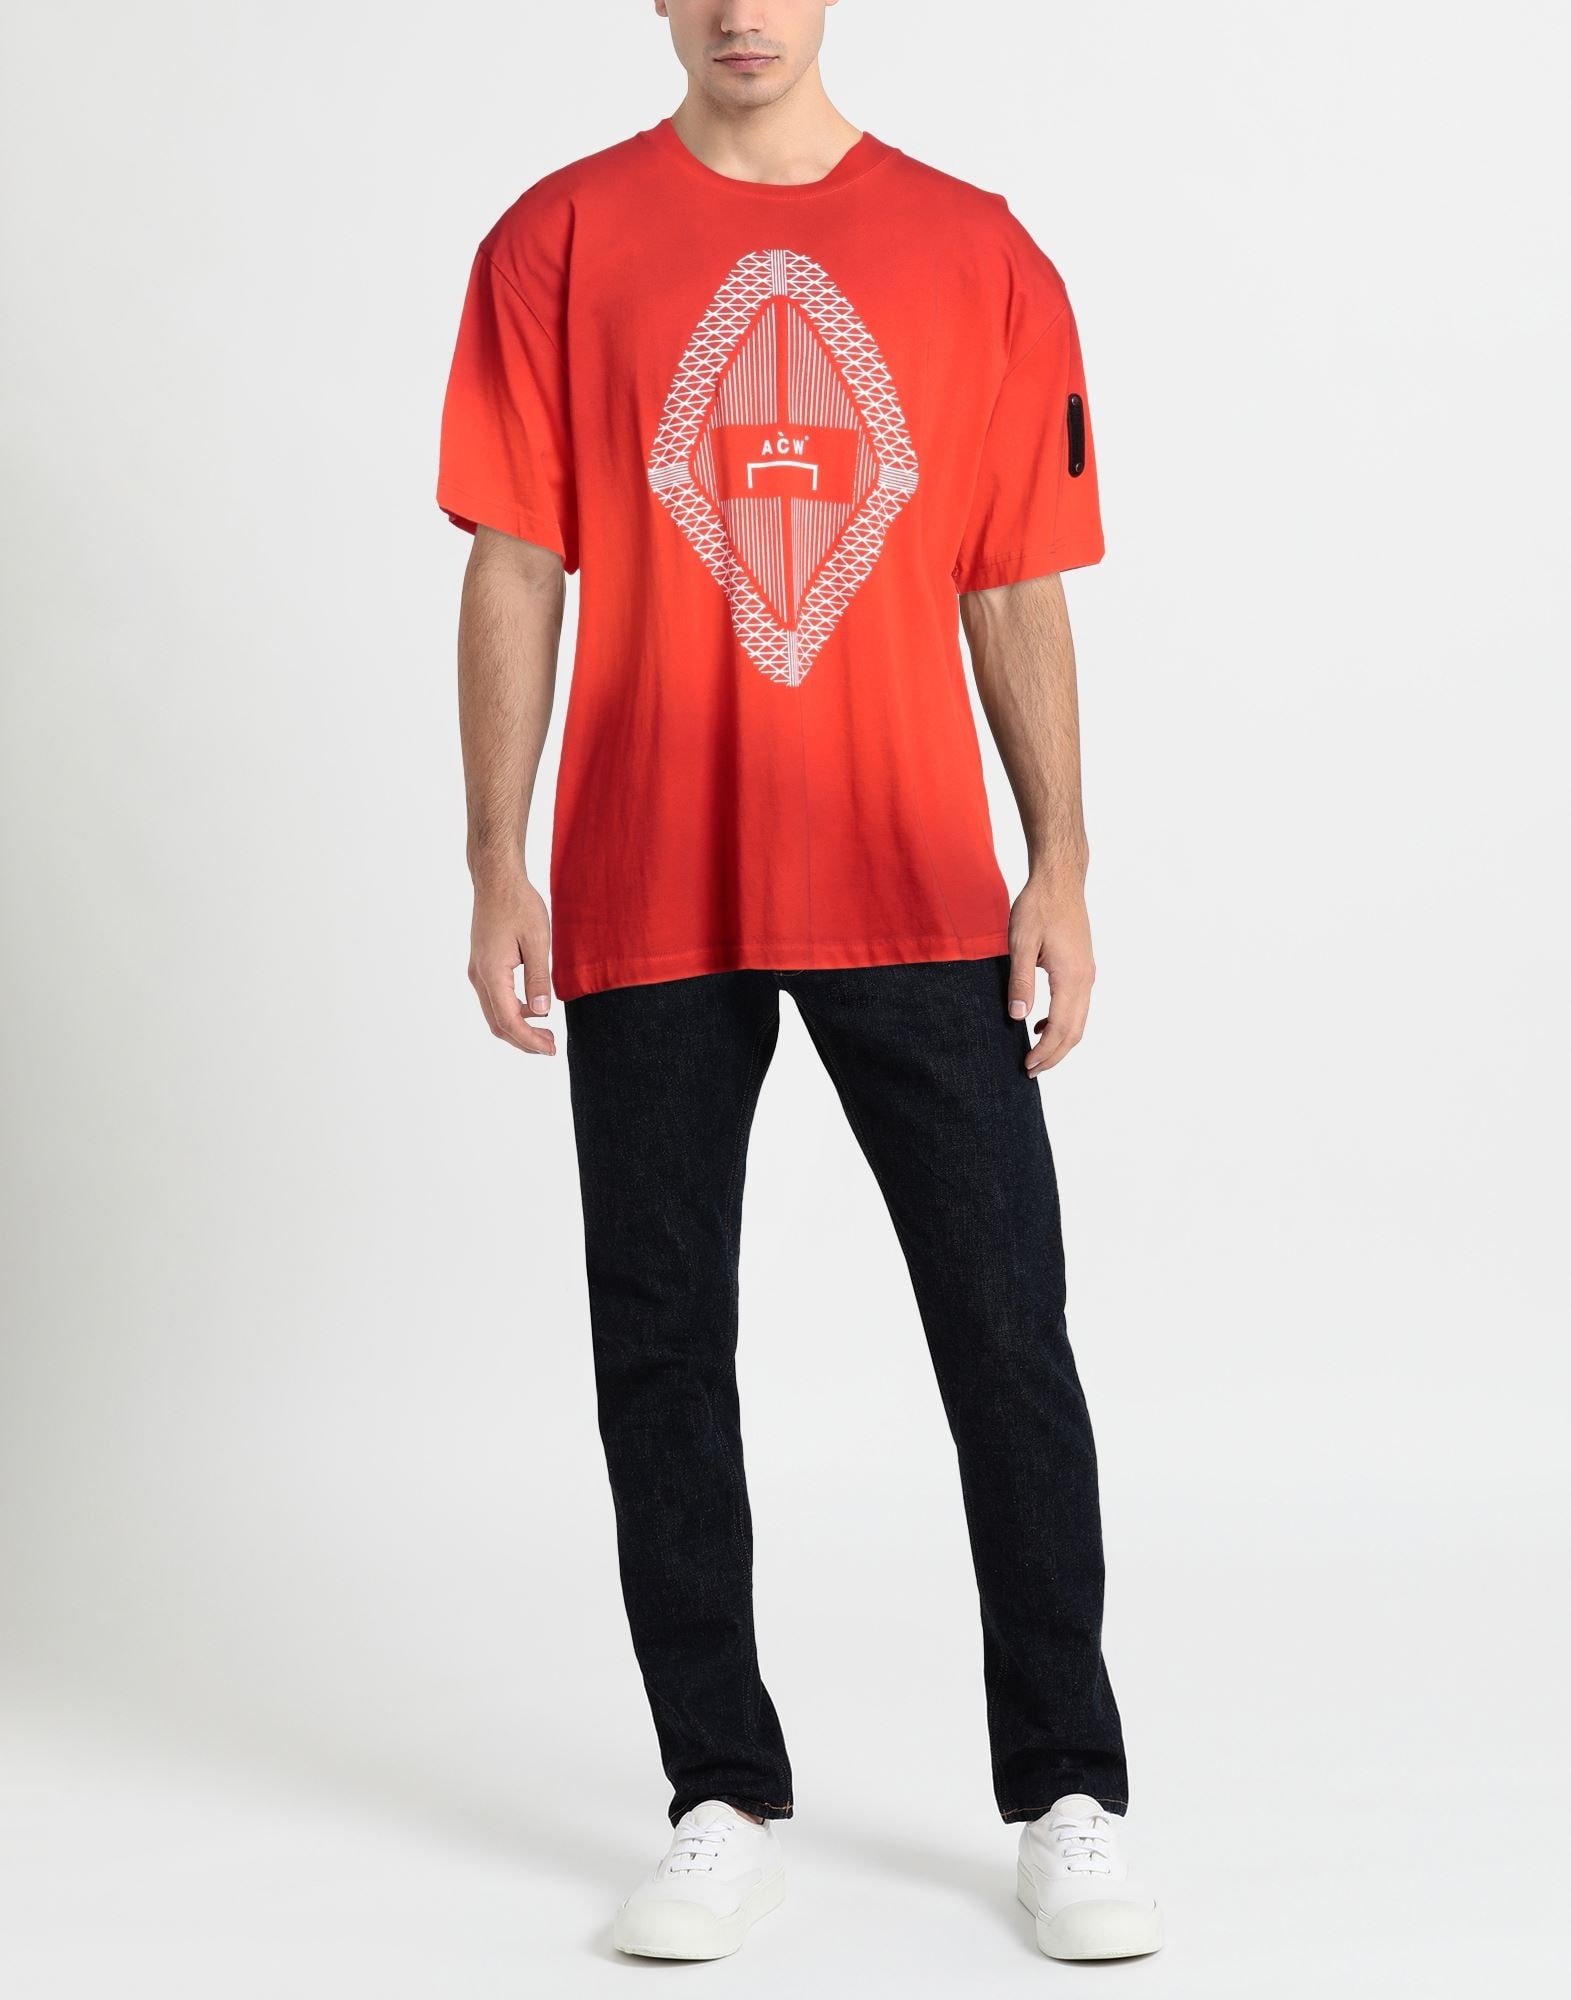 Red Men's T-shirt - 2